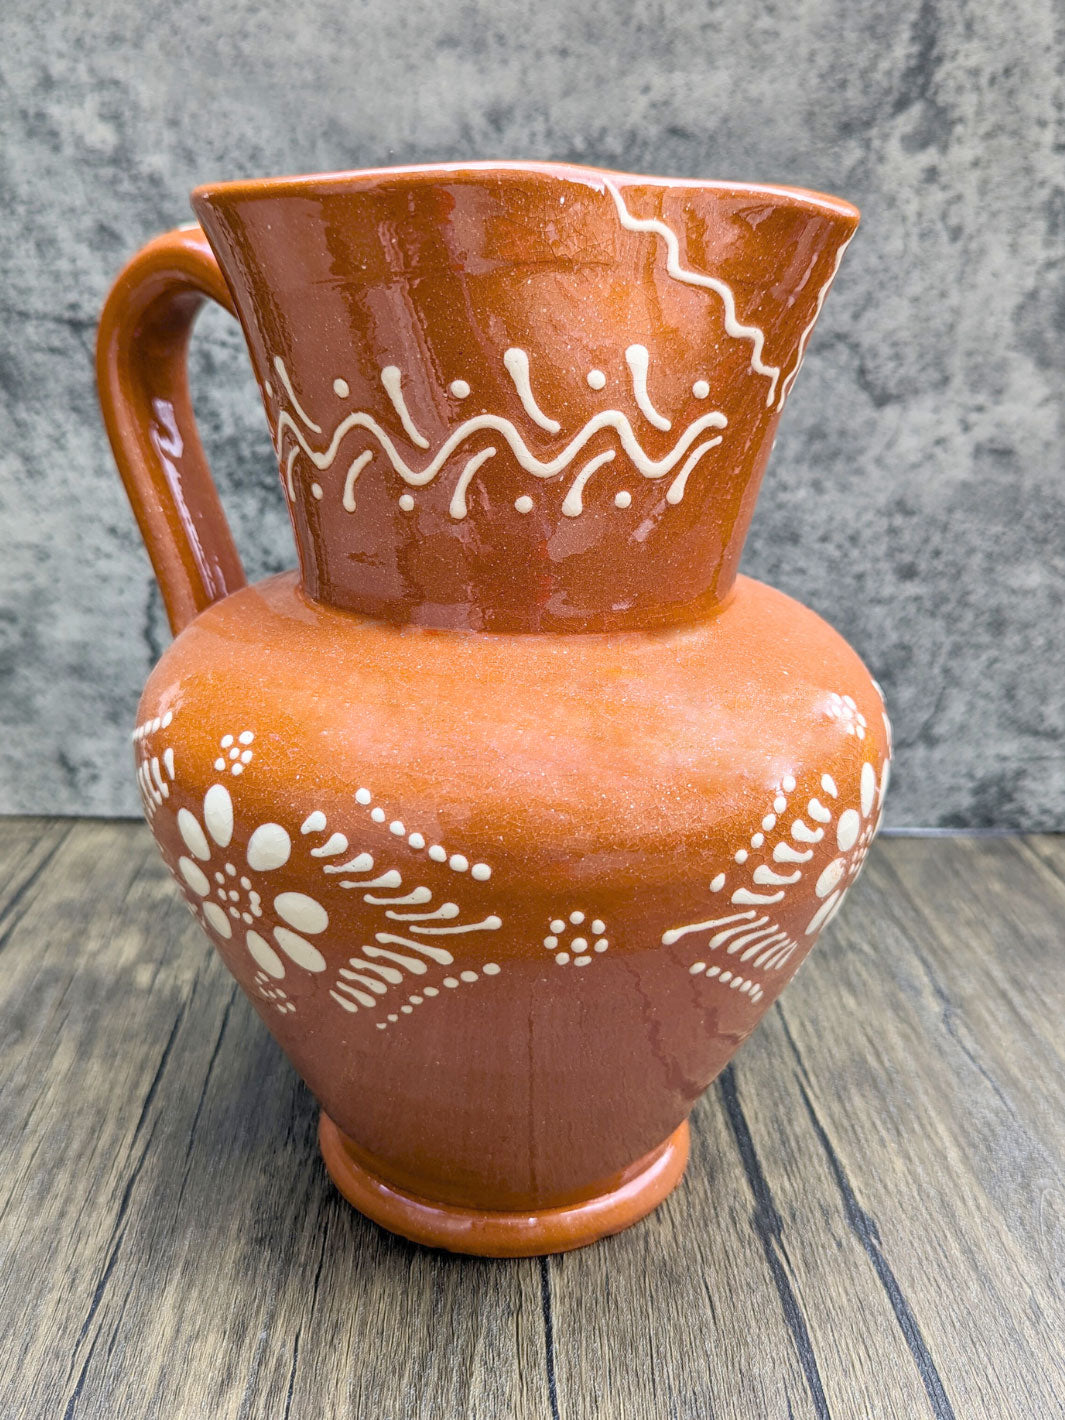 Portuguese Pottery Terracotta Glazed Clay Pitcher